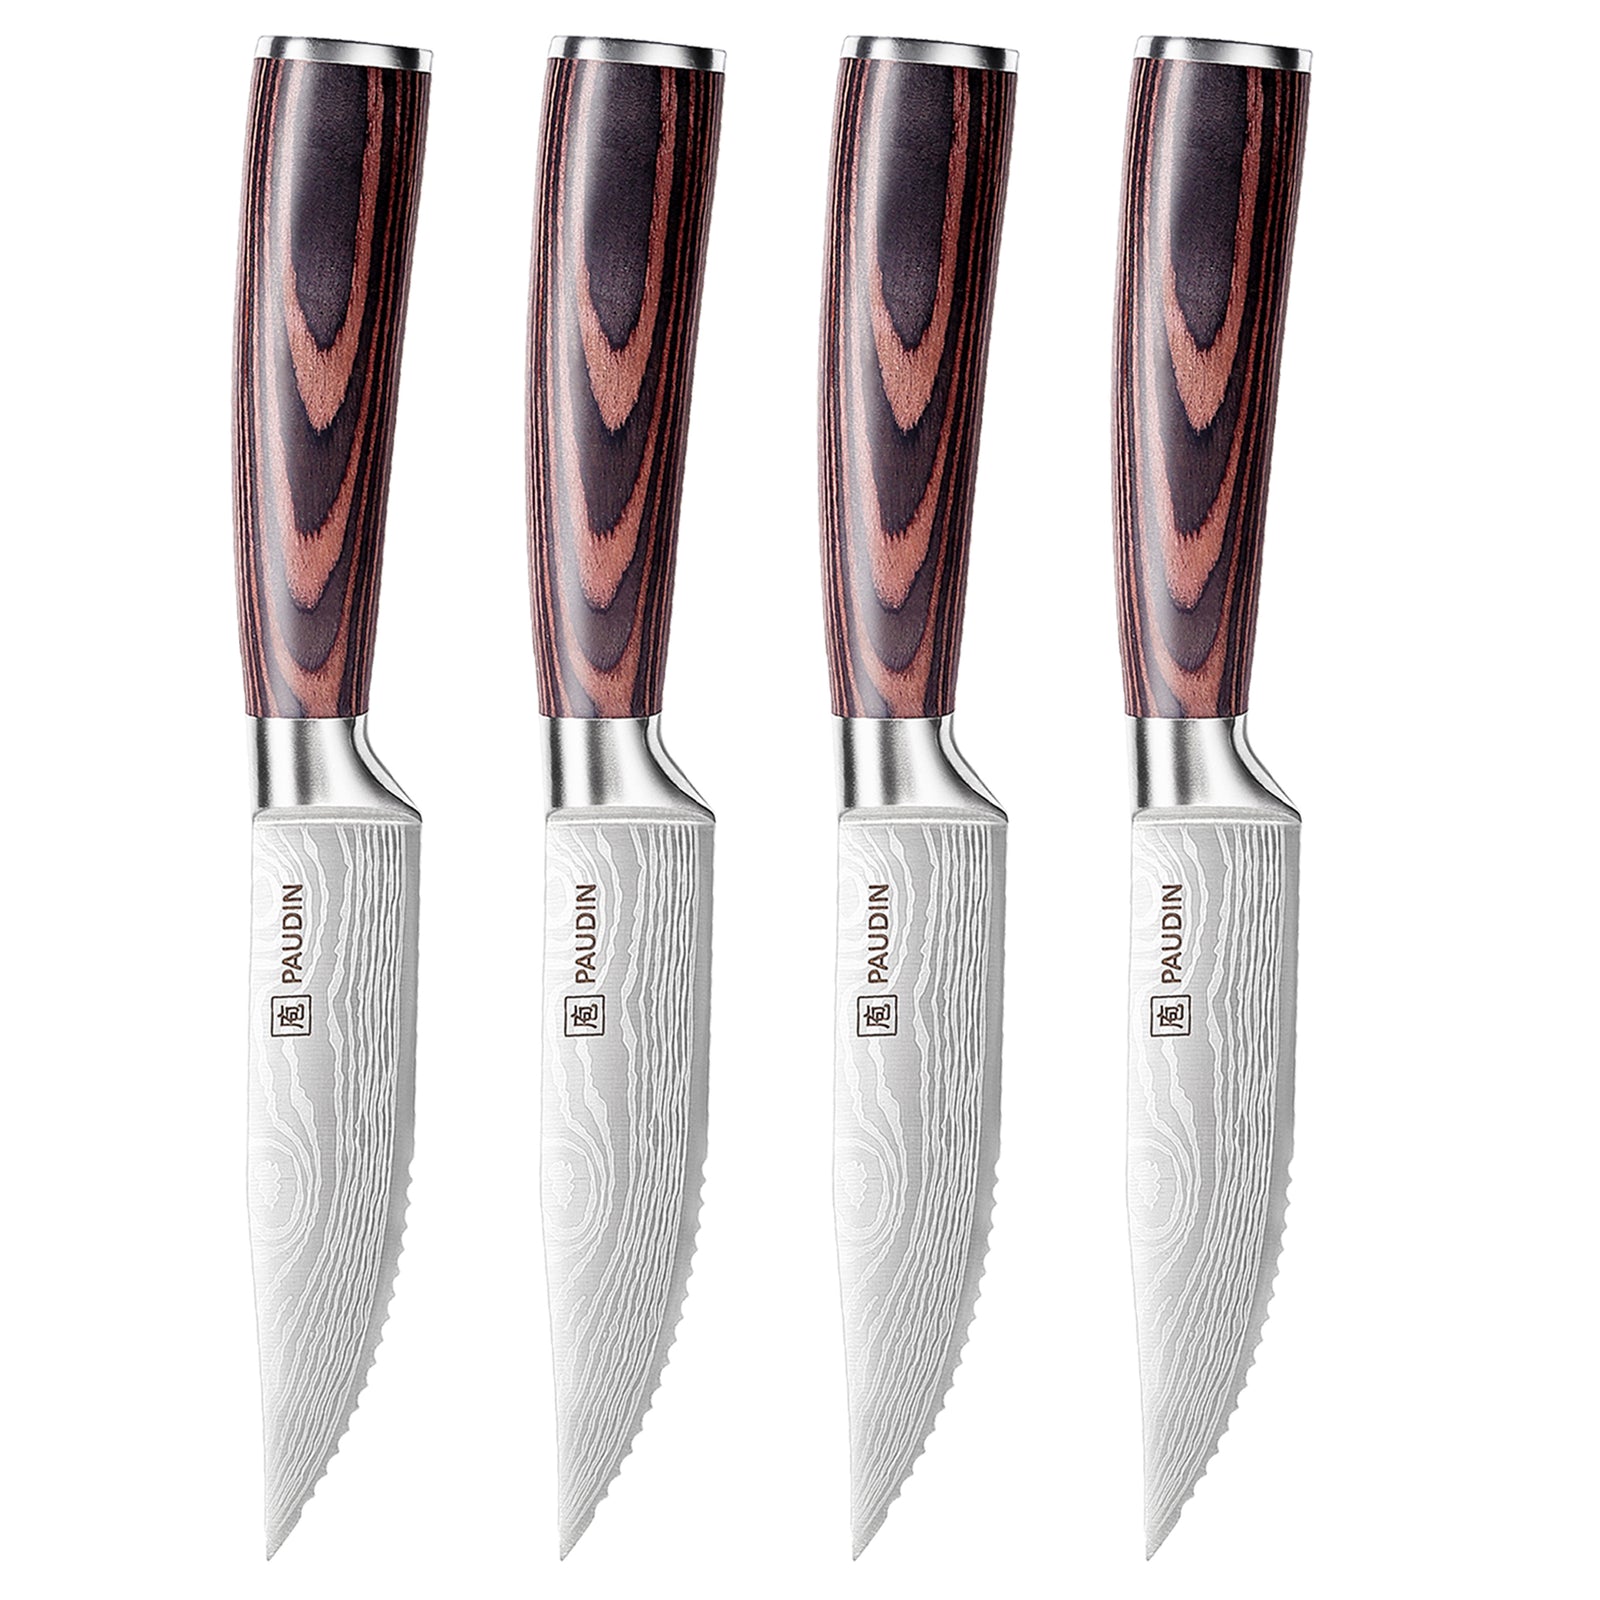 Paudin Uk - Japanese Knives, Professional Knives for the Home, Japanese  Knife Set, Japanese Knives